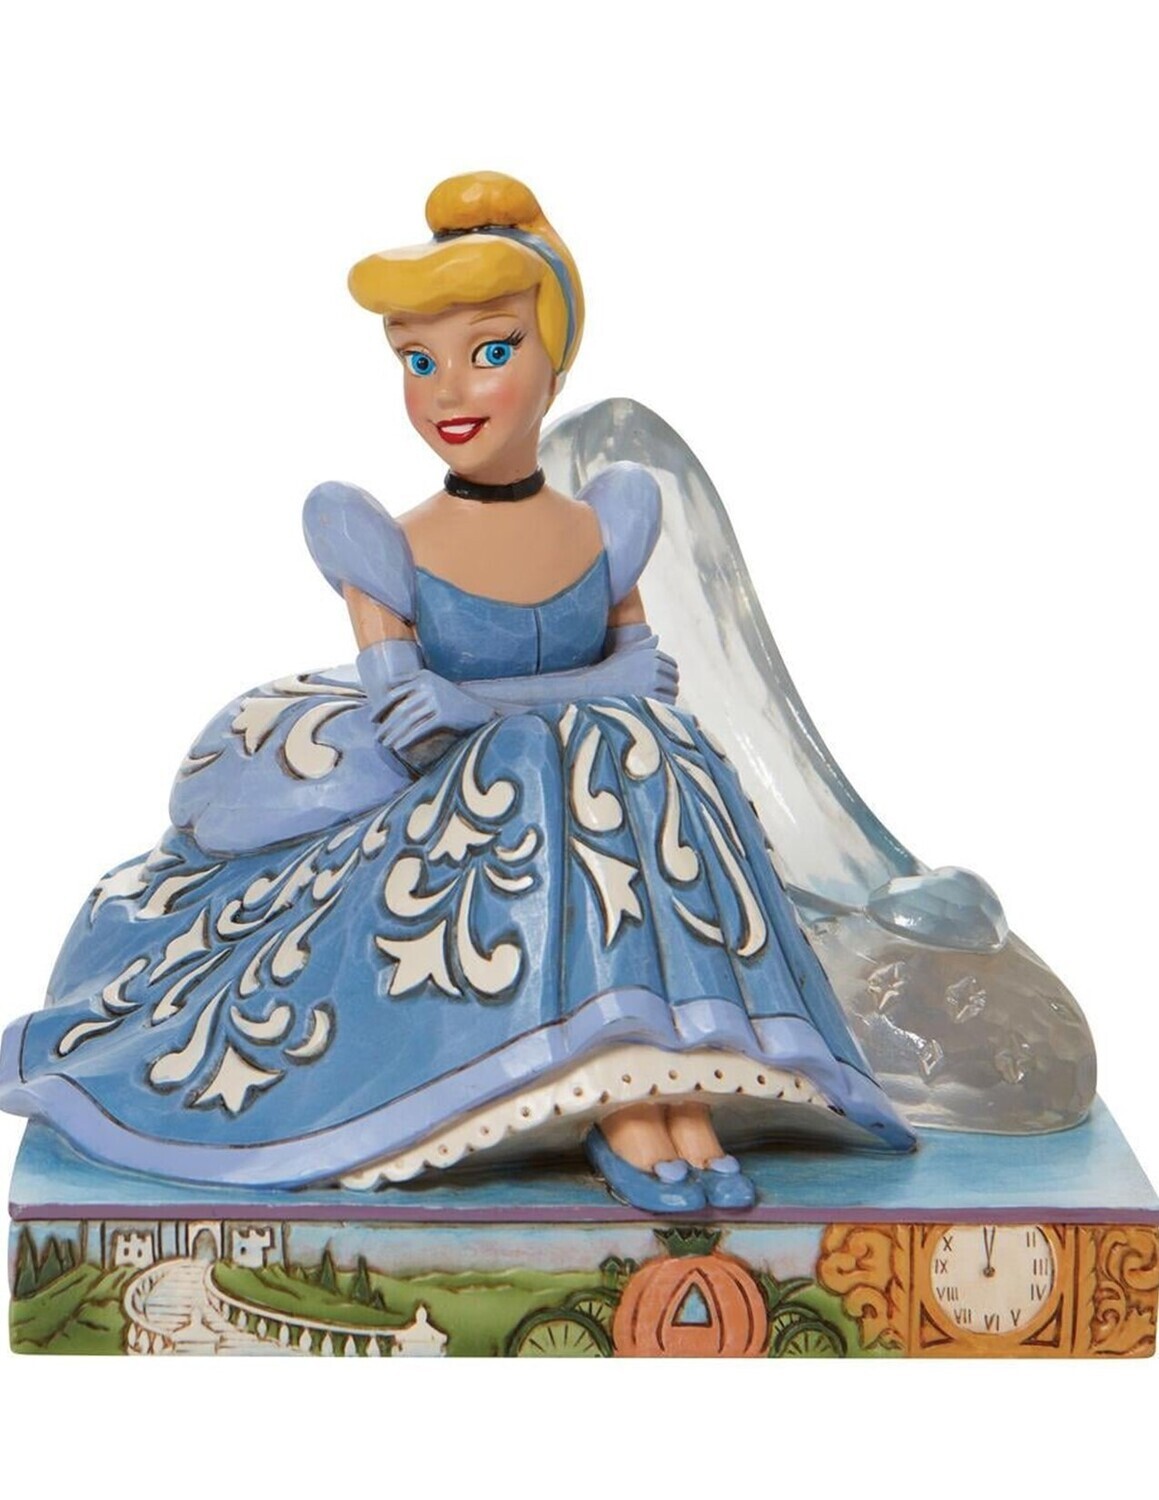 Jim Shore Disney Traditions "Cinderella and Glass Slipper -A Magical Moonlight” Figurine (6010095)